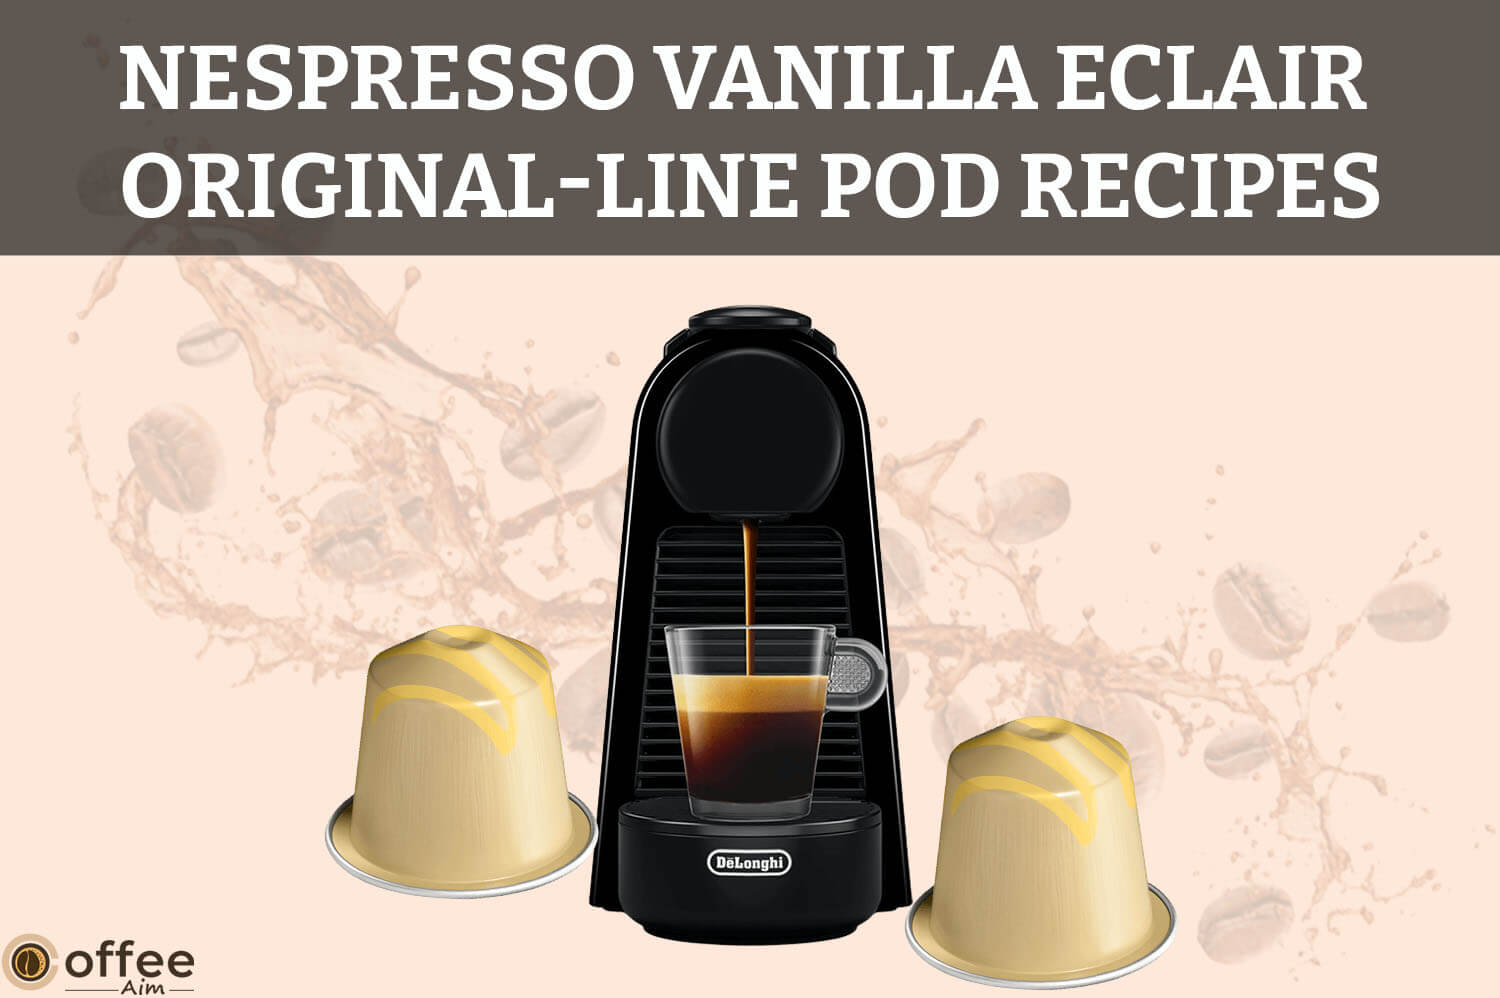 Featured image for the article "Nespresso Vanilla Eclair Original-Line Pod Recipes"